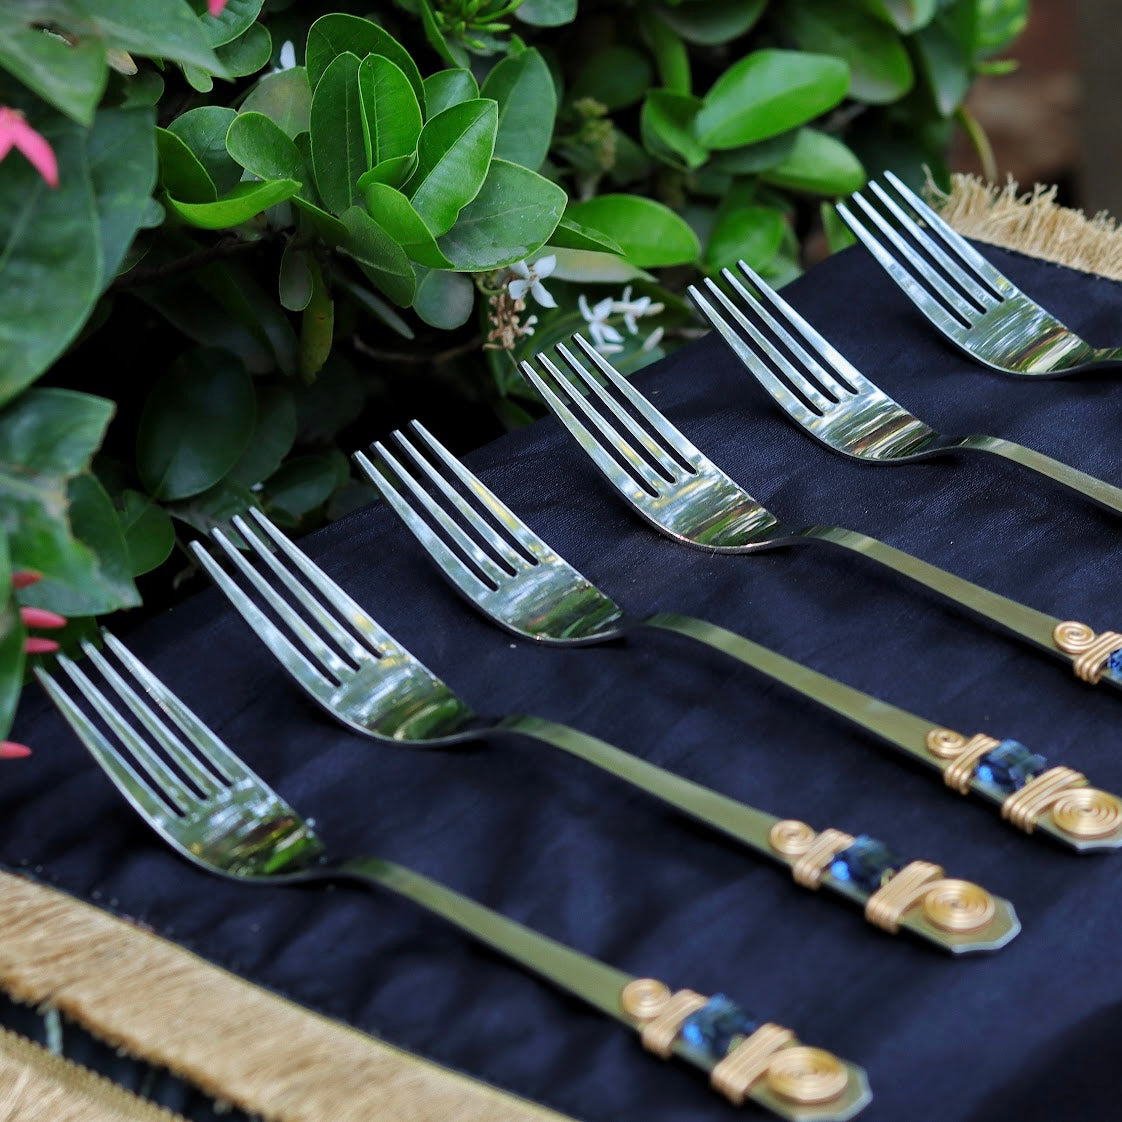 Blue Swarovski Dinner Forks